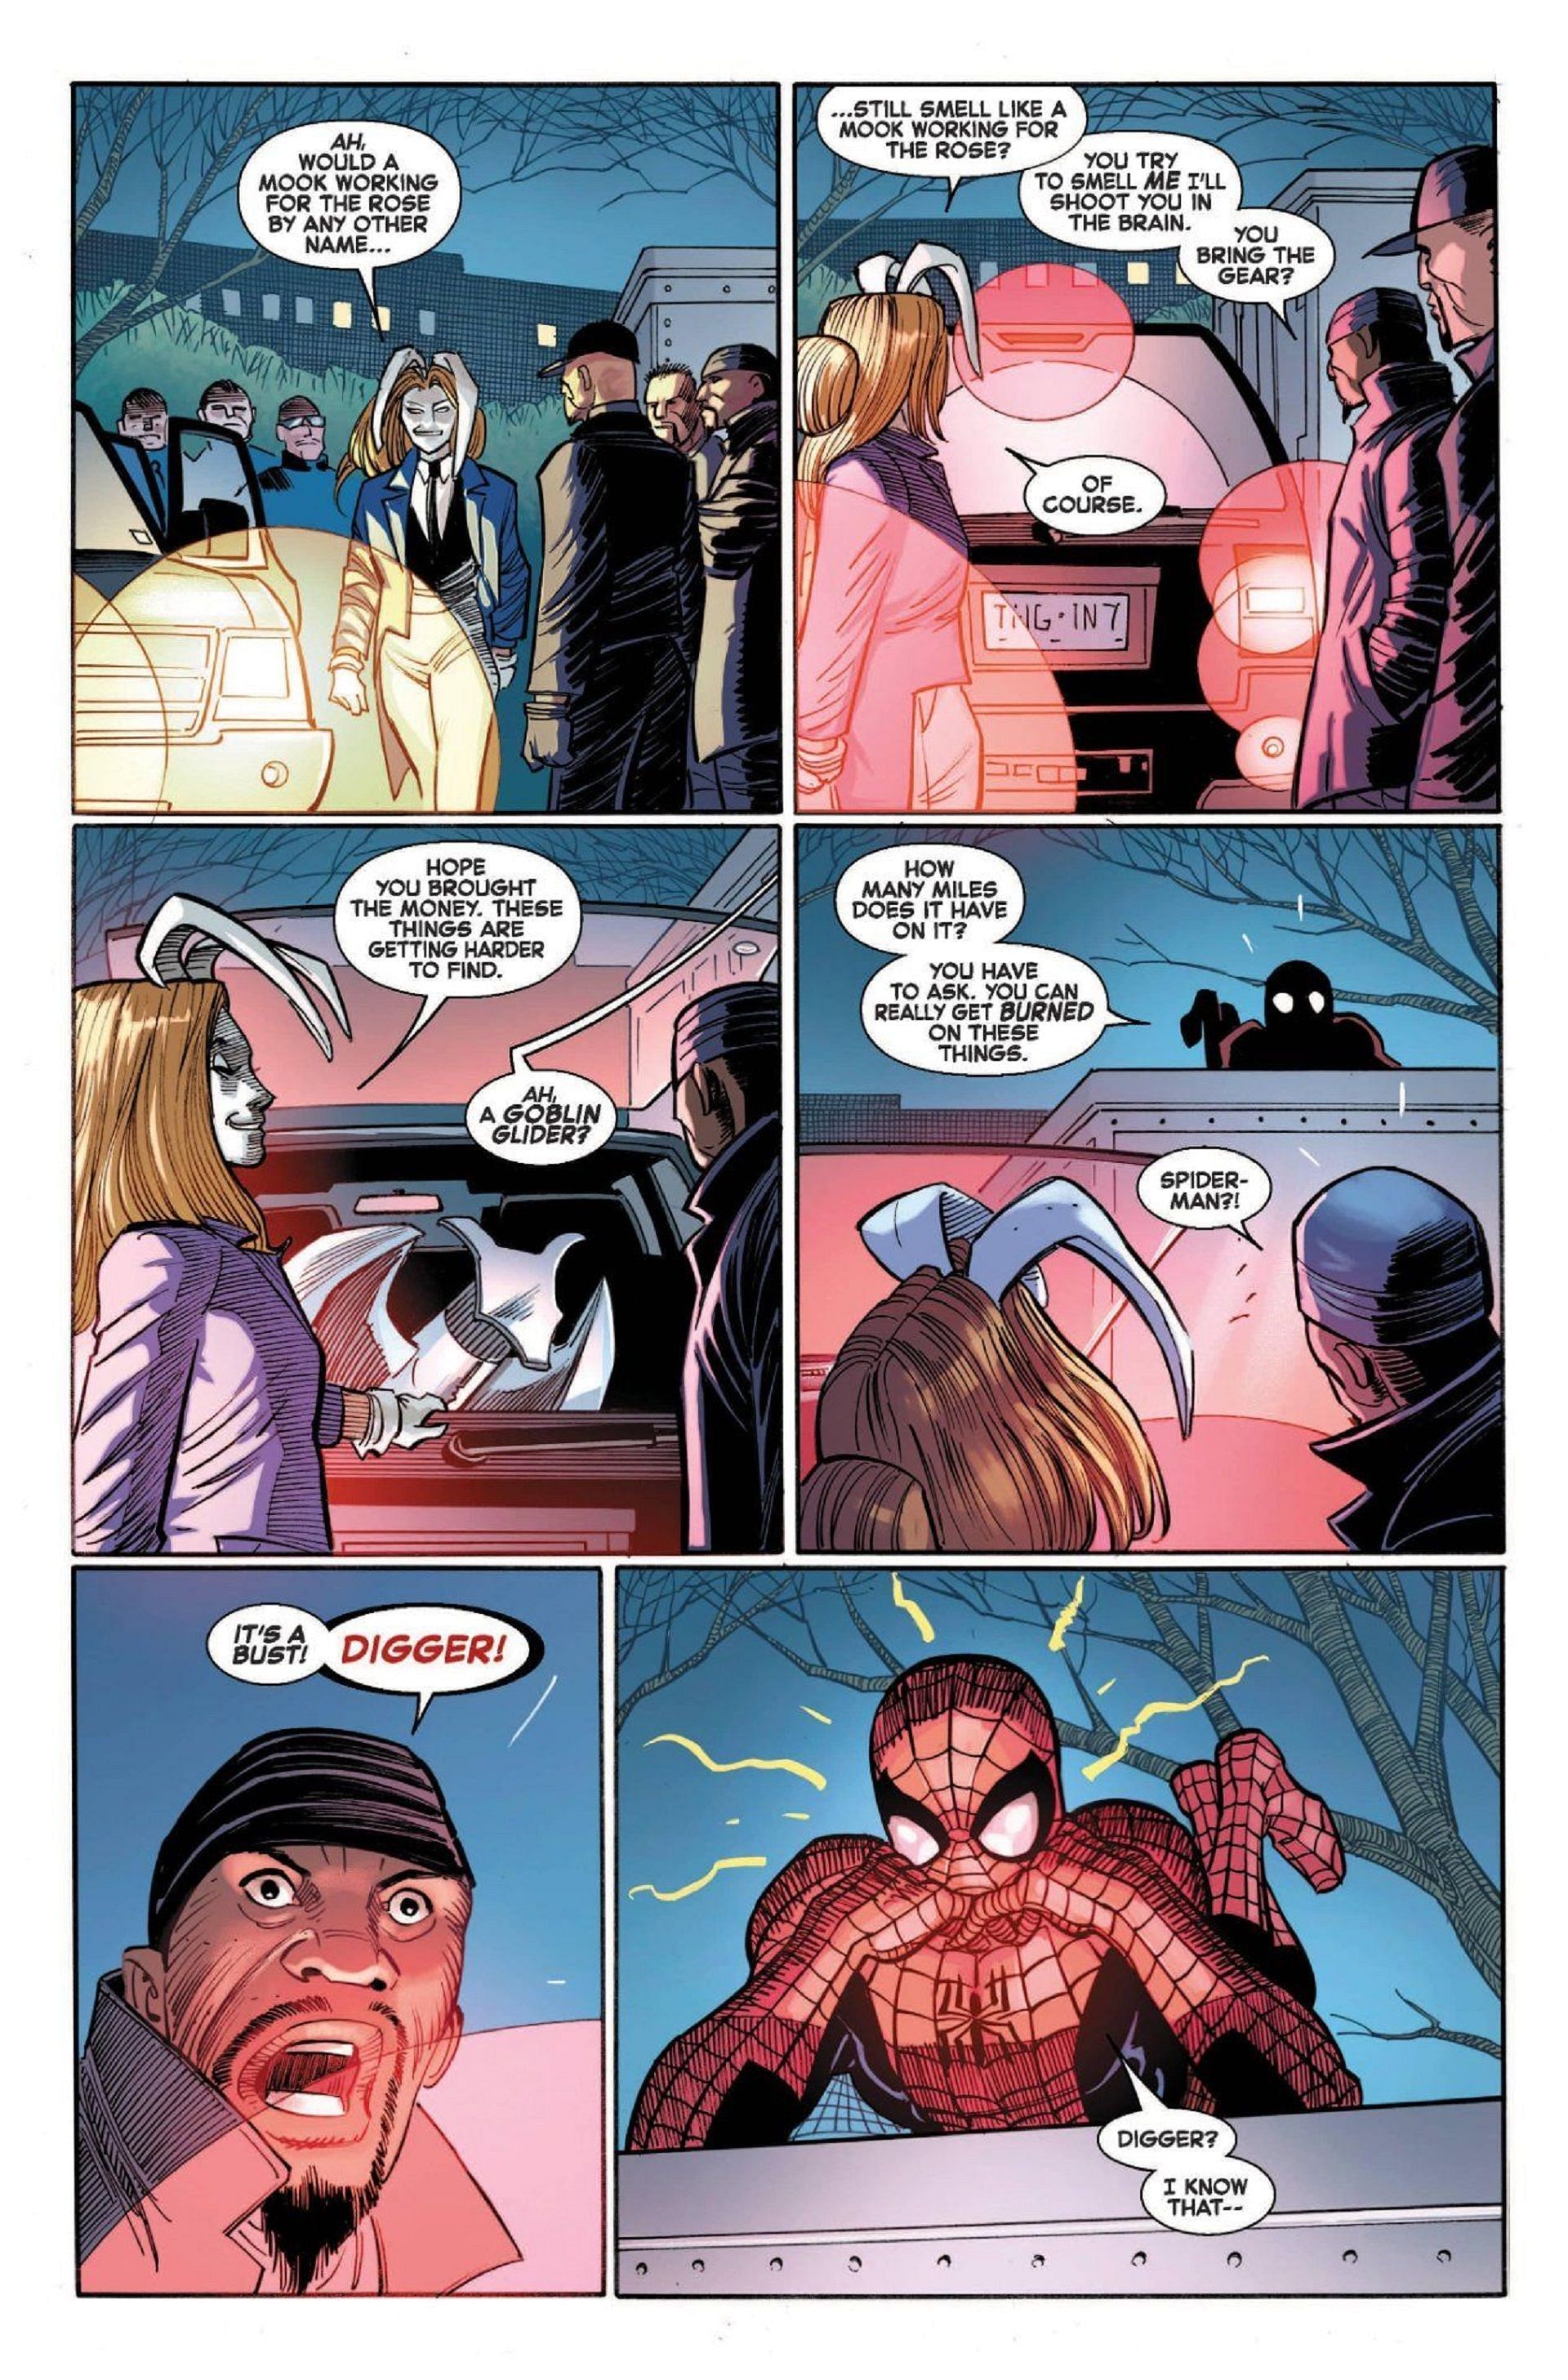 Amazing Spider-Man #1 preview (Image via Marvel)